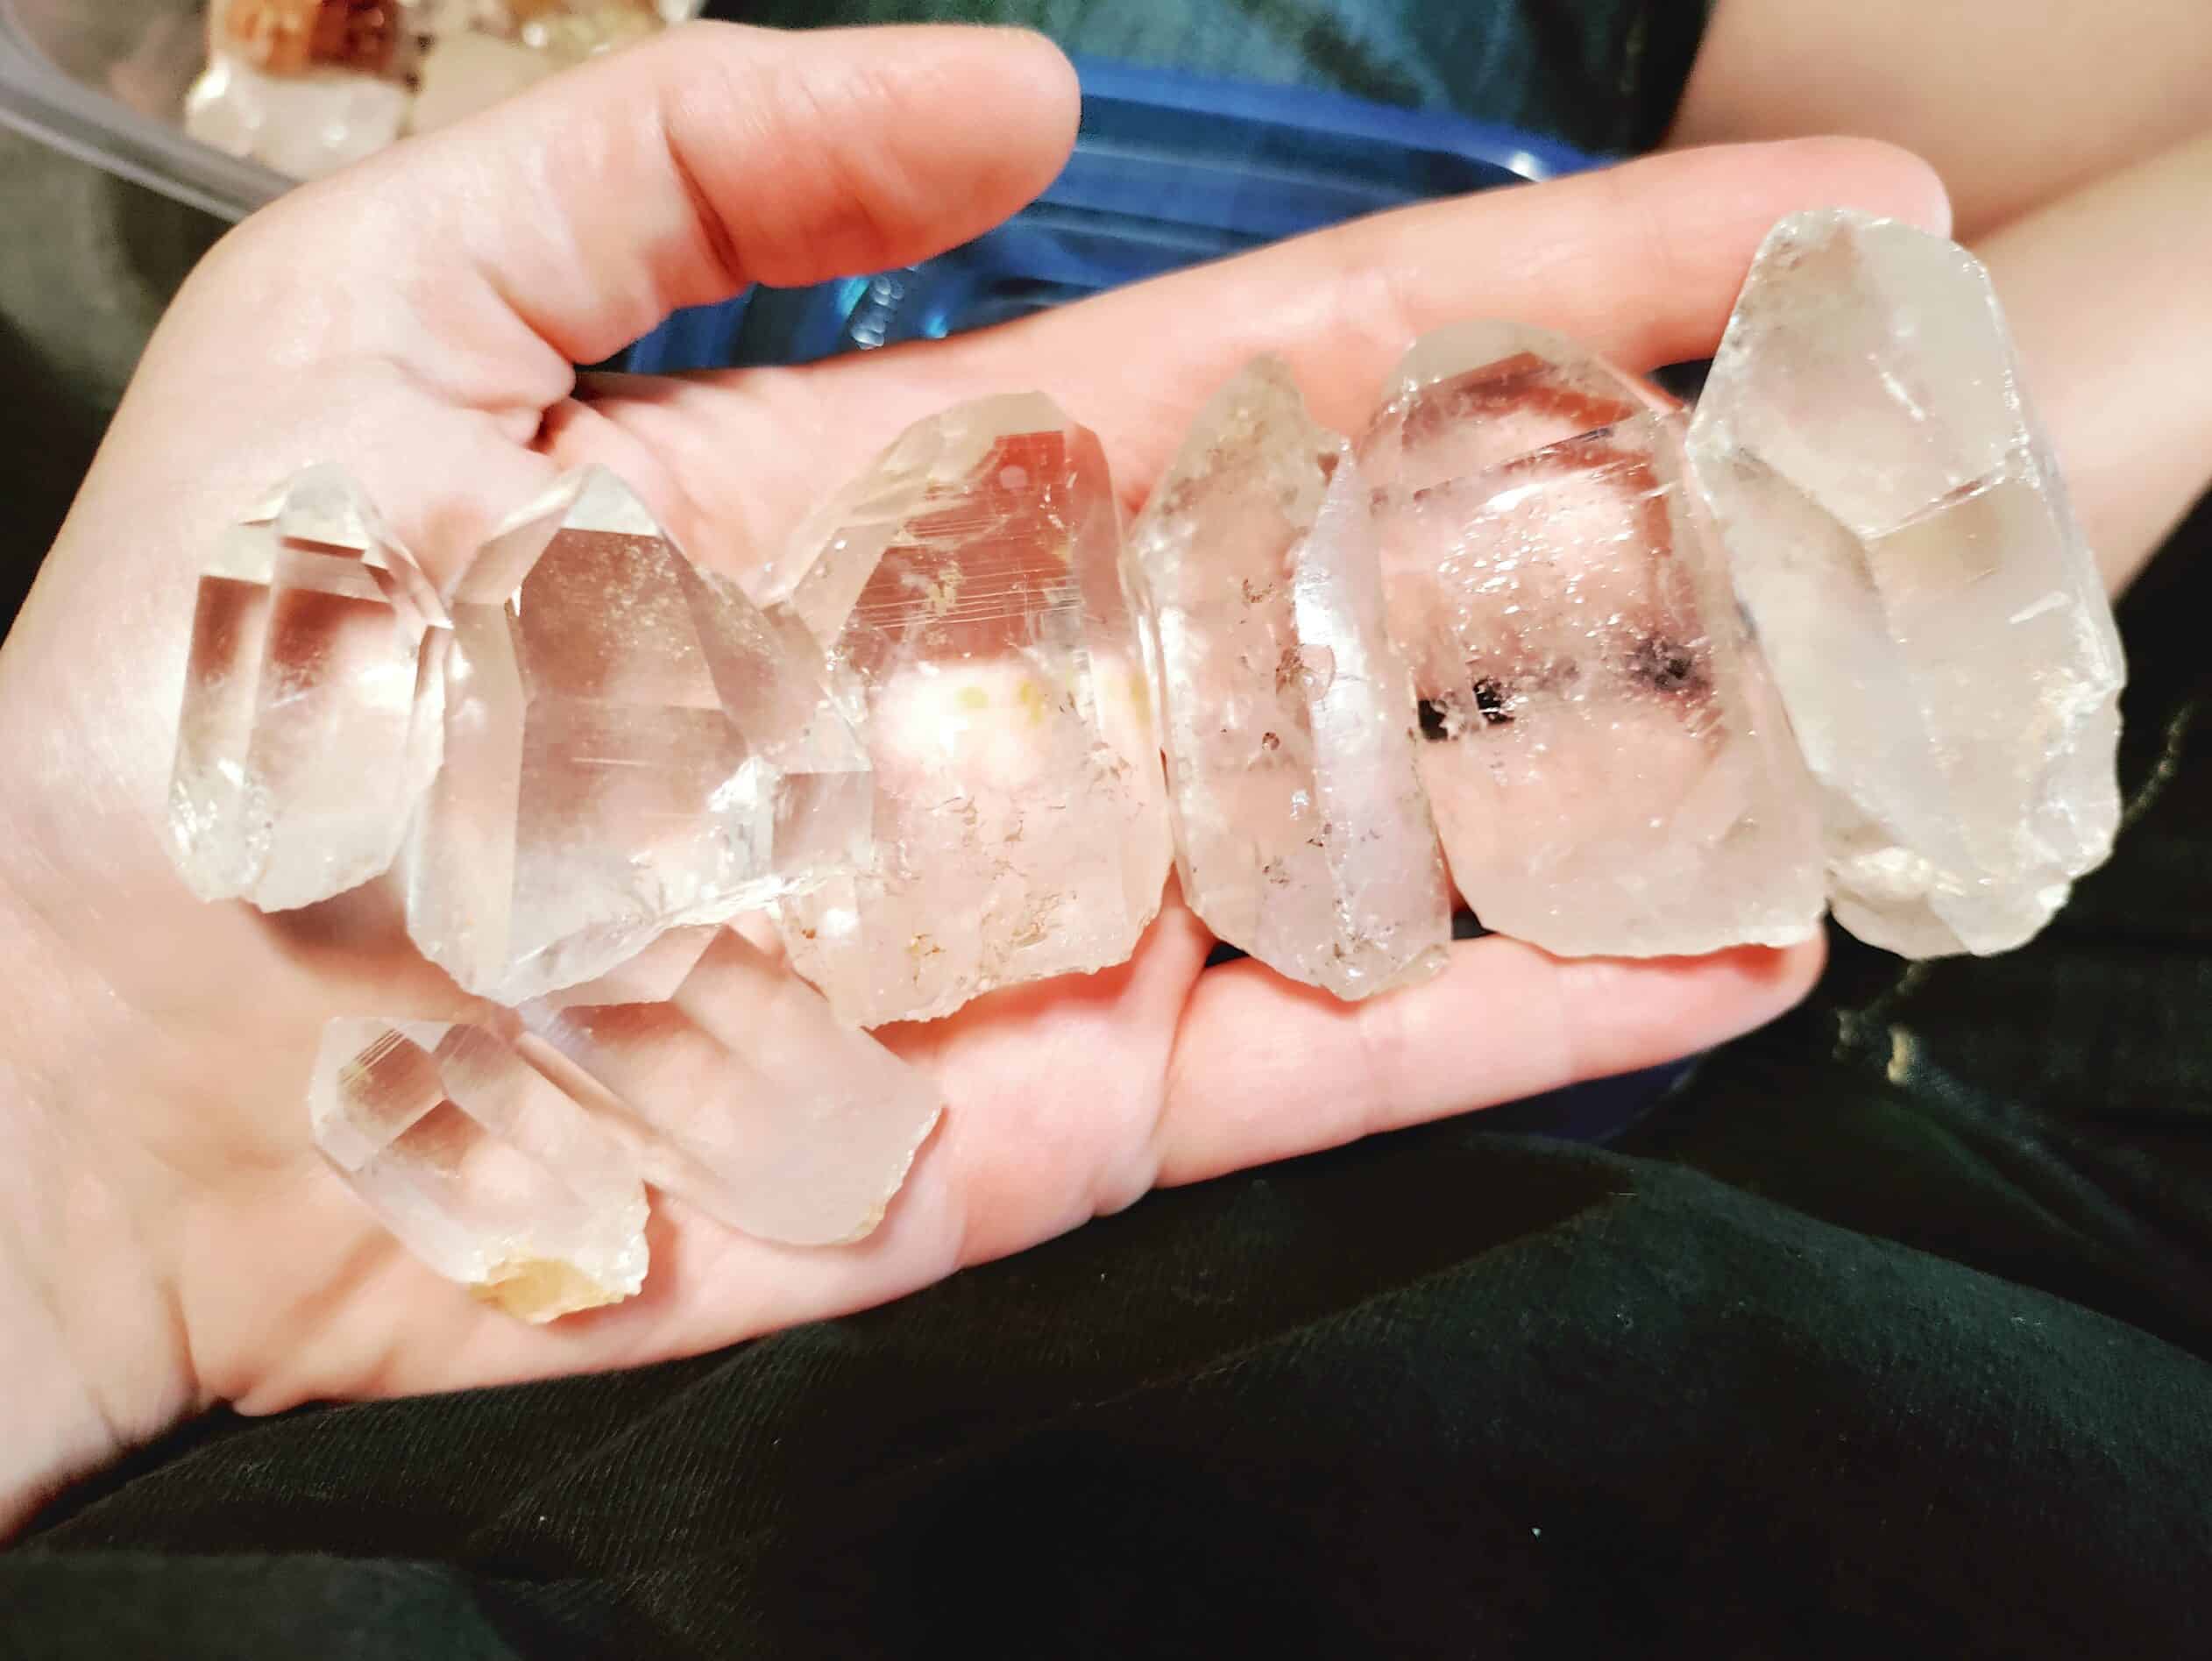 crystals from the quartz mines in arkansas